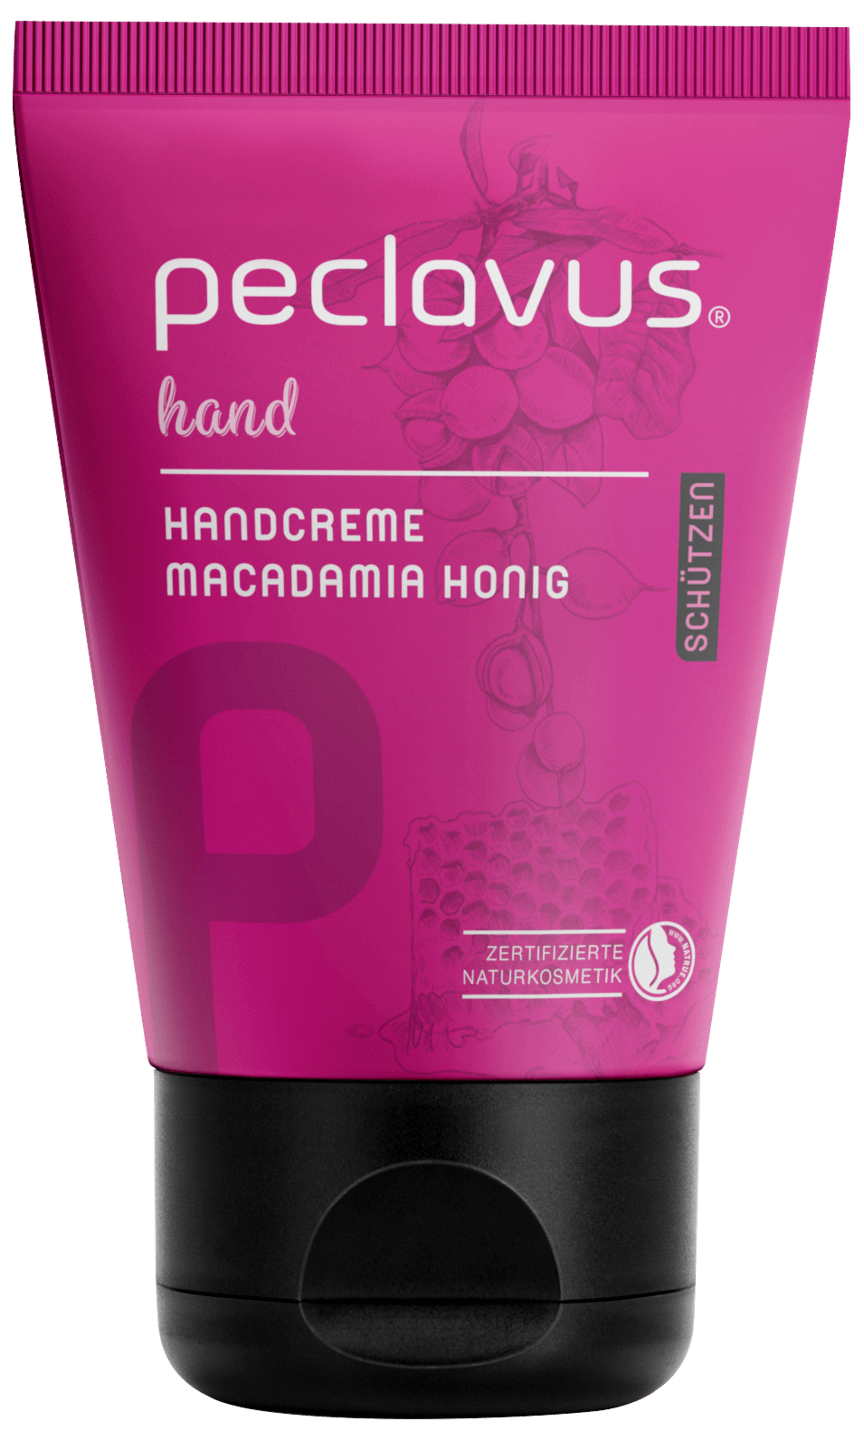 peclavus - Handcreme Macadamia Honig | Schützen, 30 ml